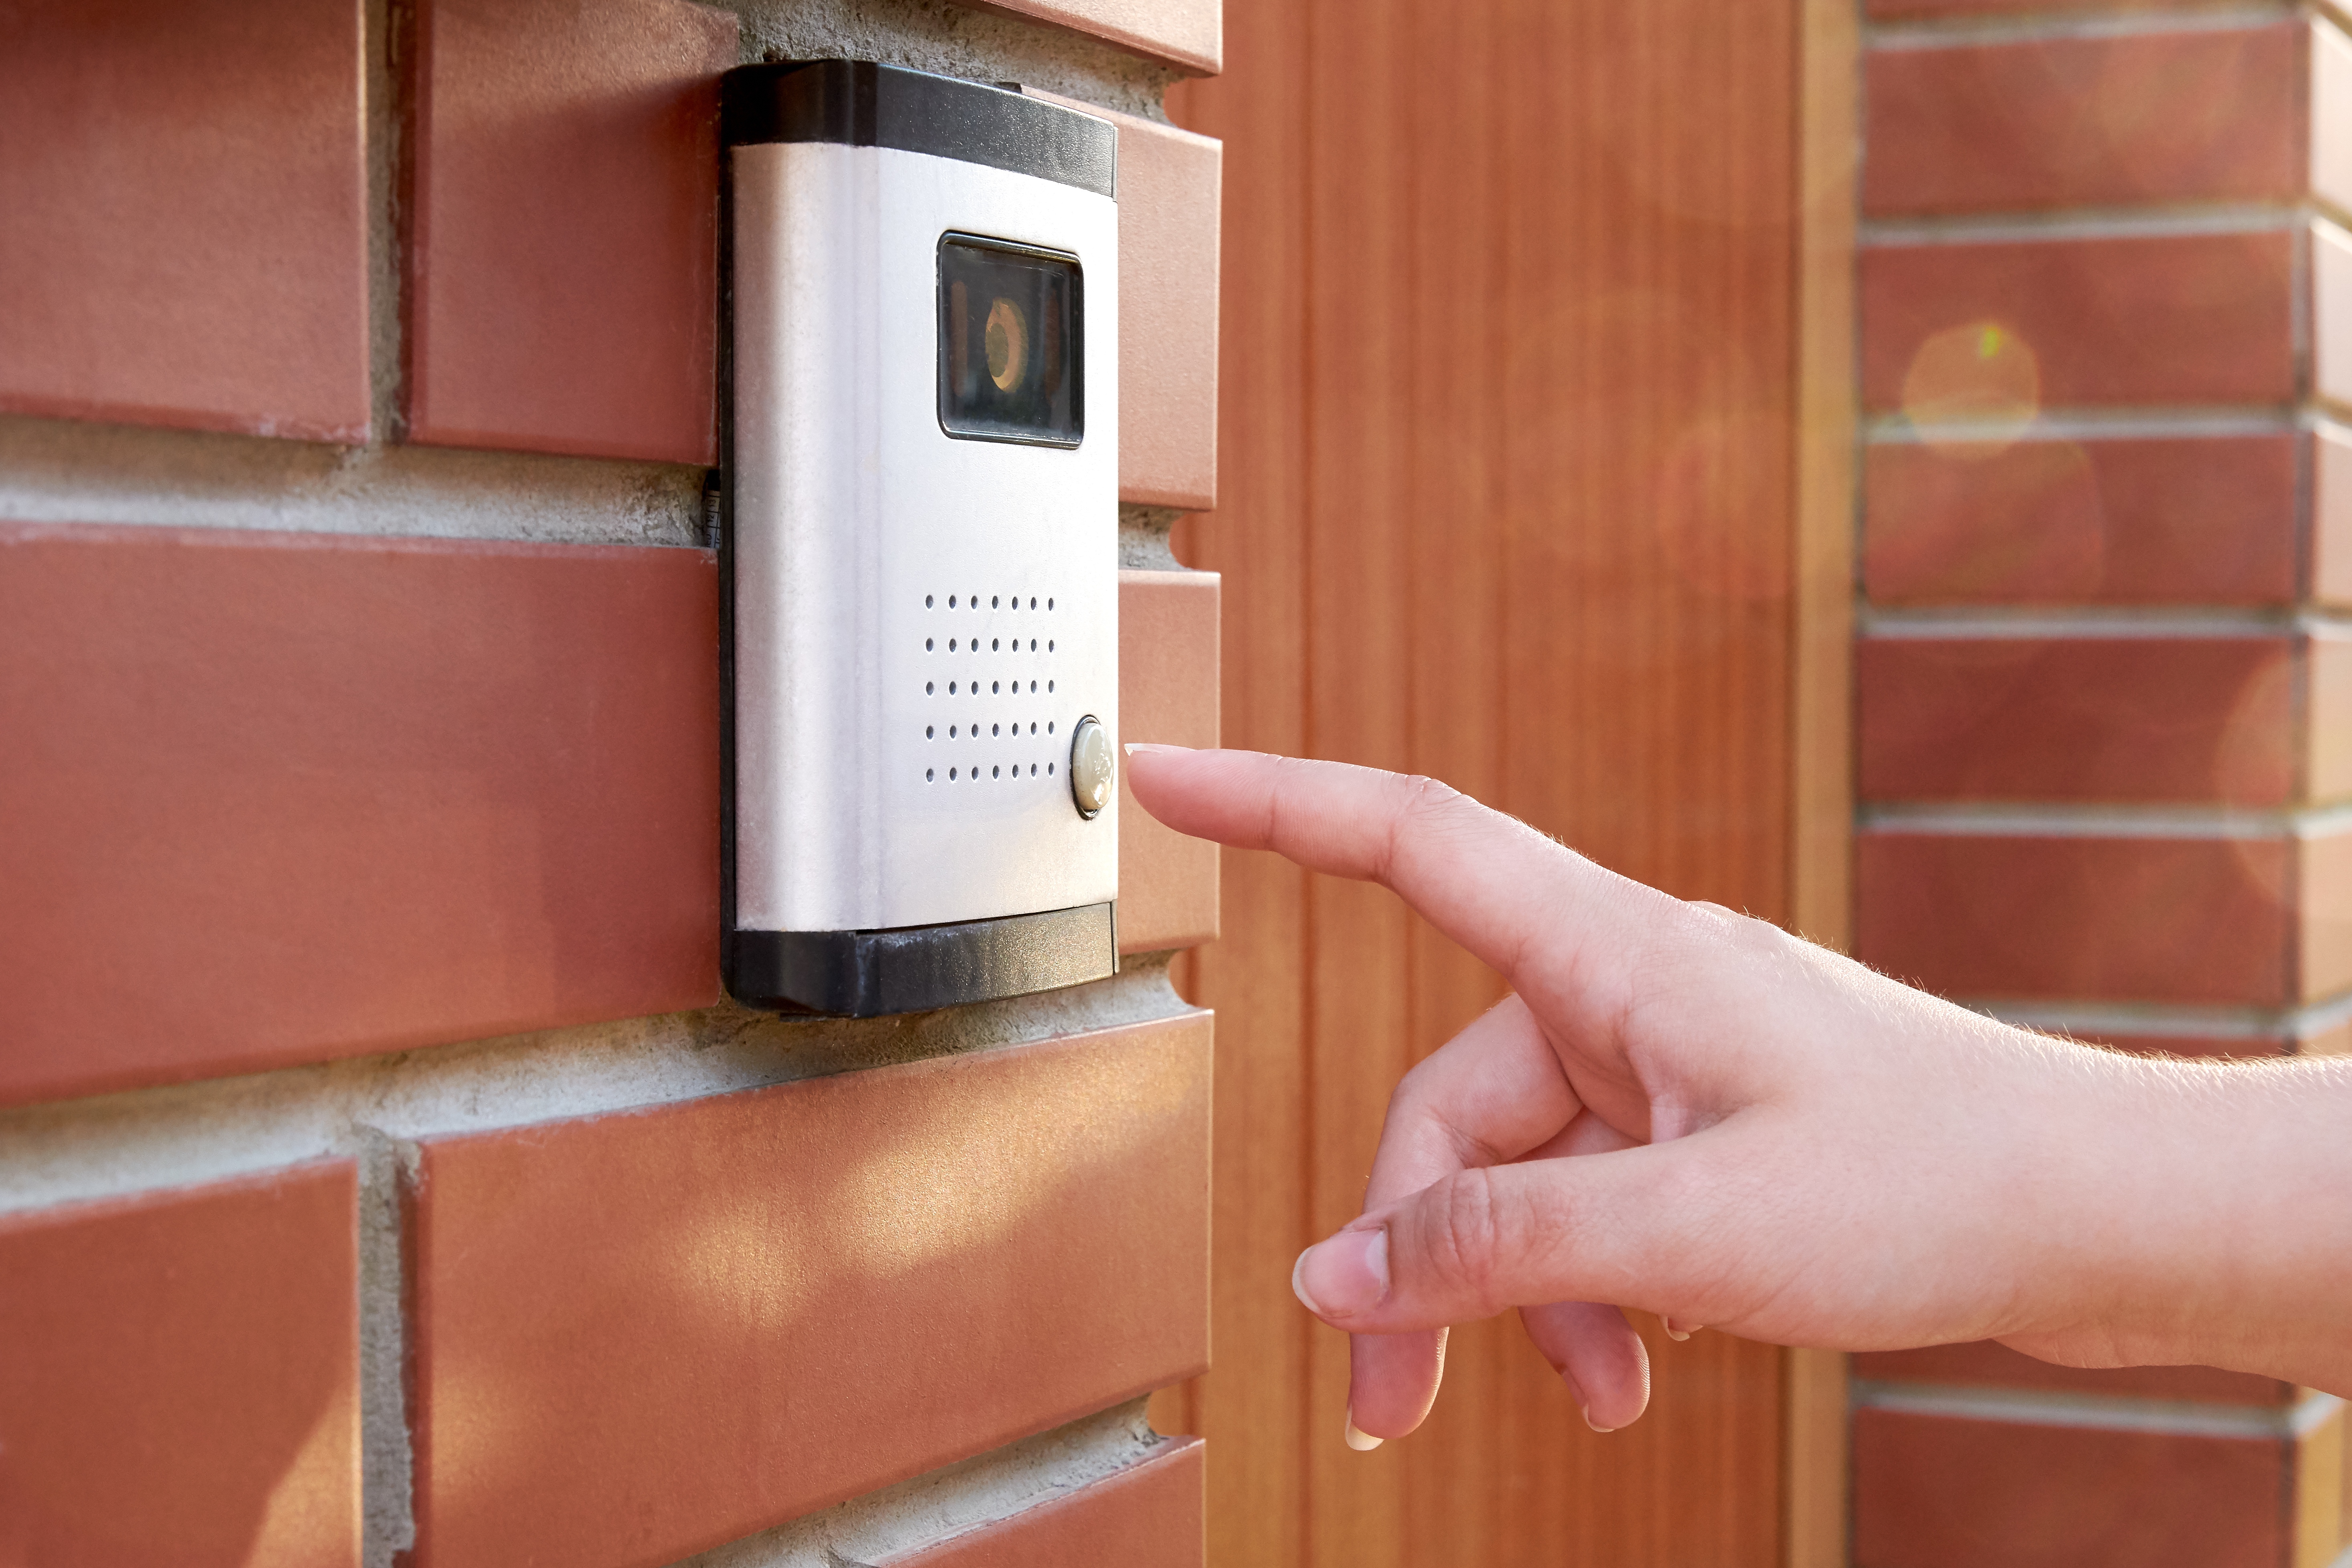 https://www.malwarebytes.com/wp-content/uploads/sites/2/2019/12/smart-doorbell-with-hand-approaching.jpg